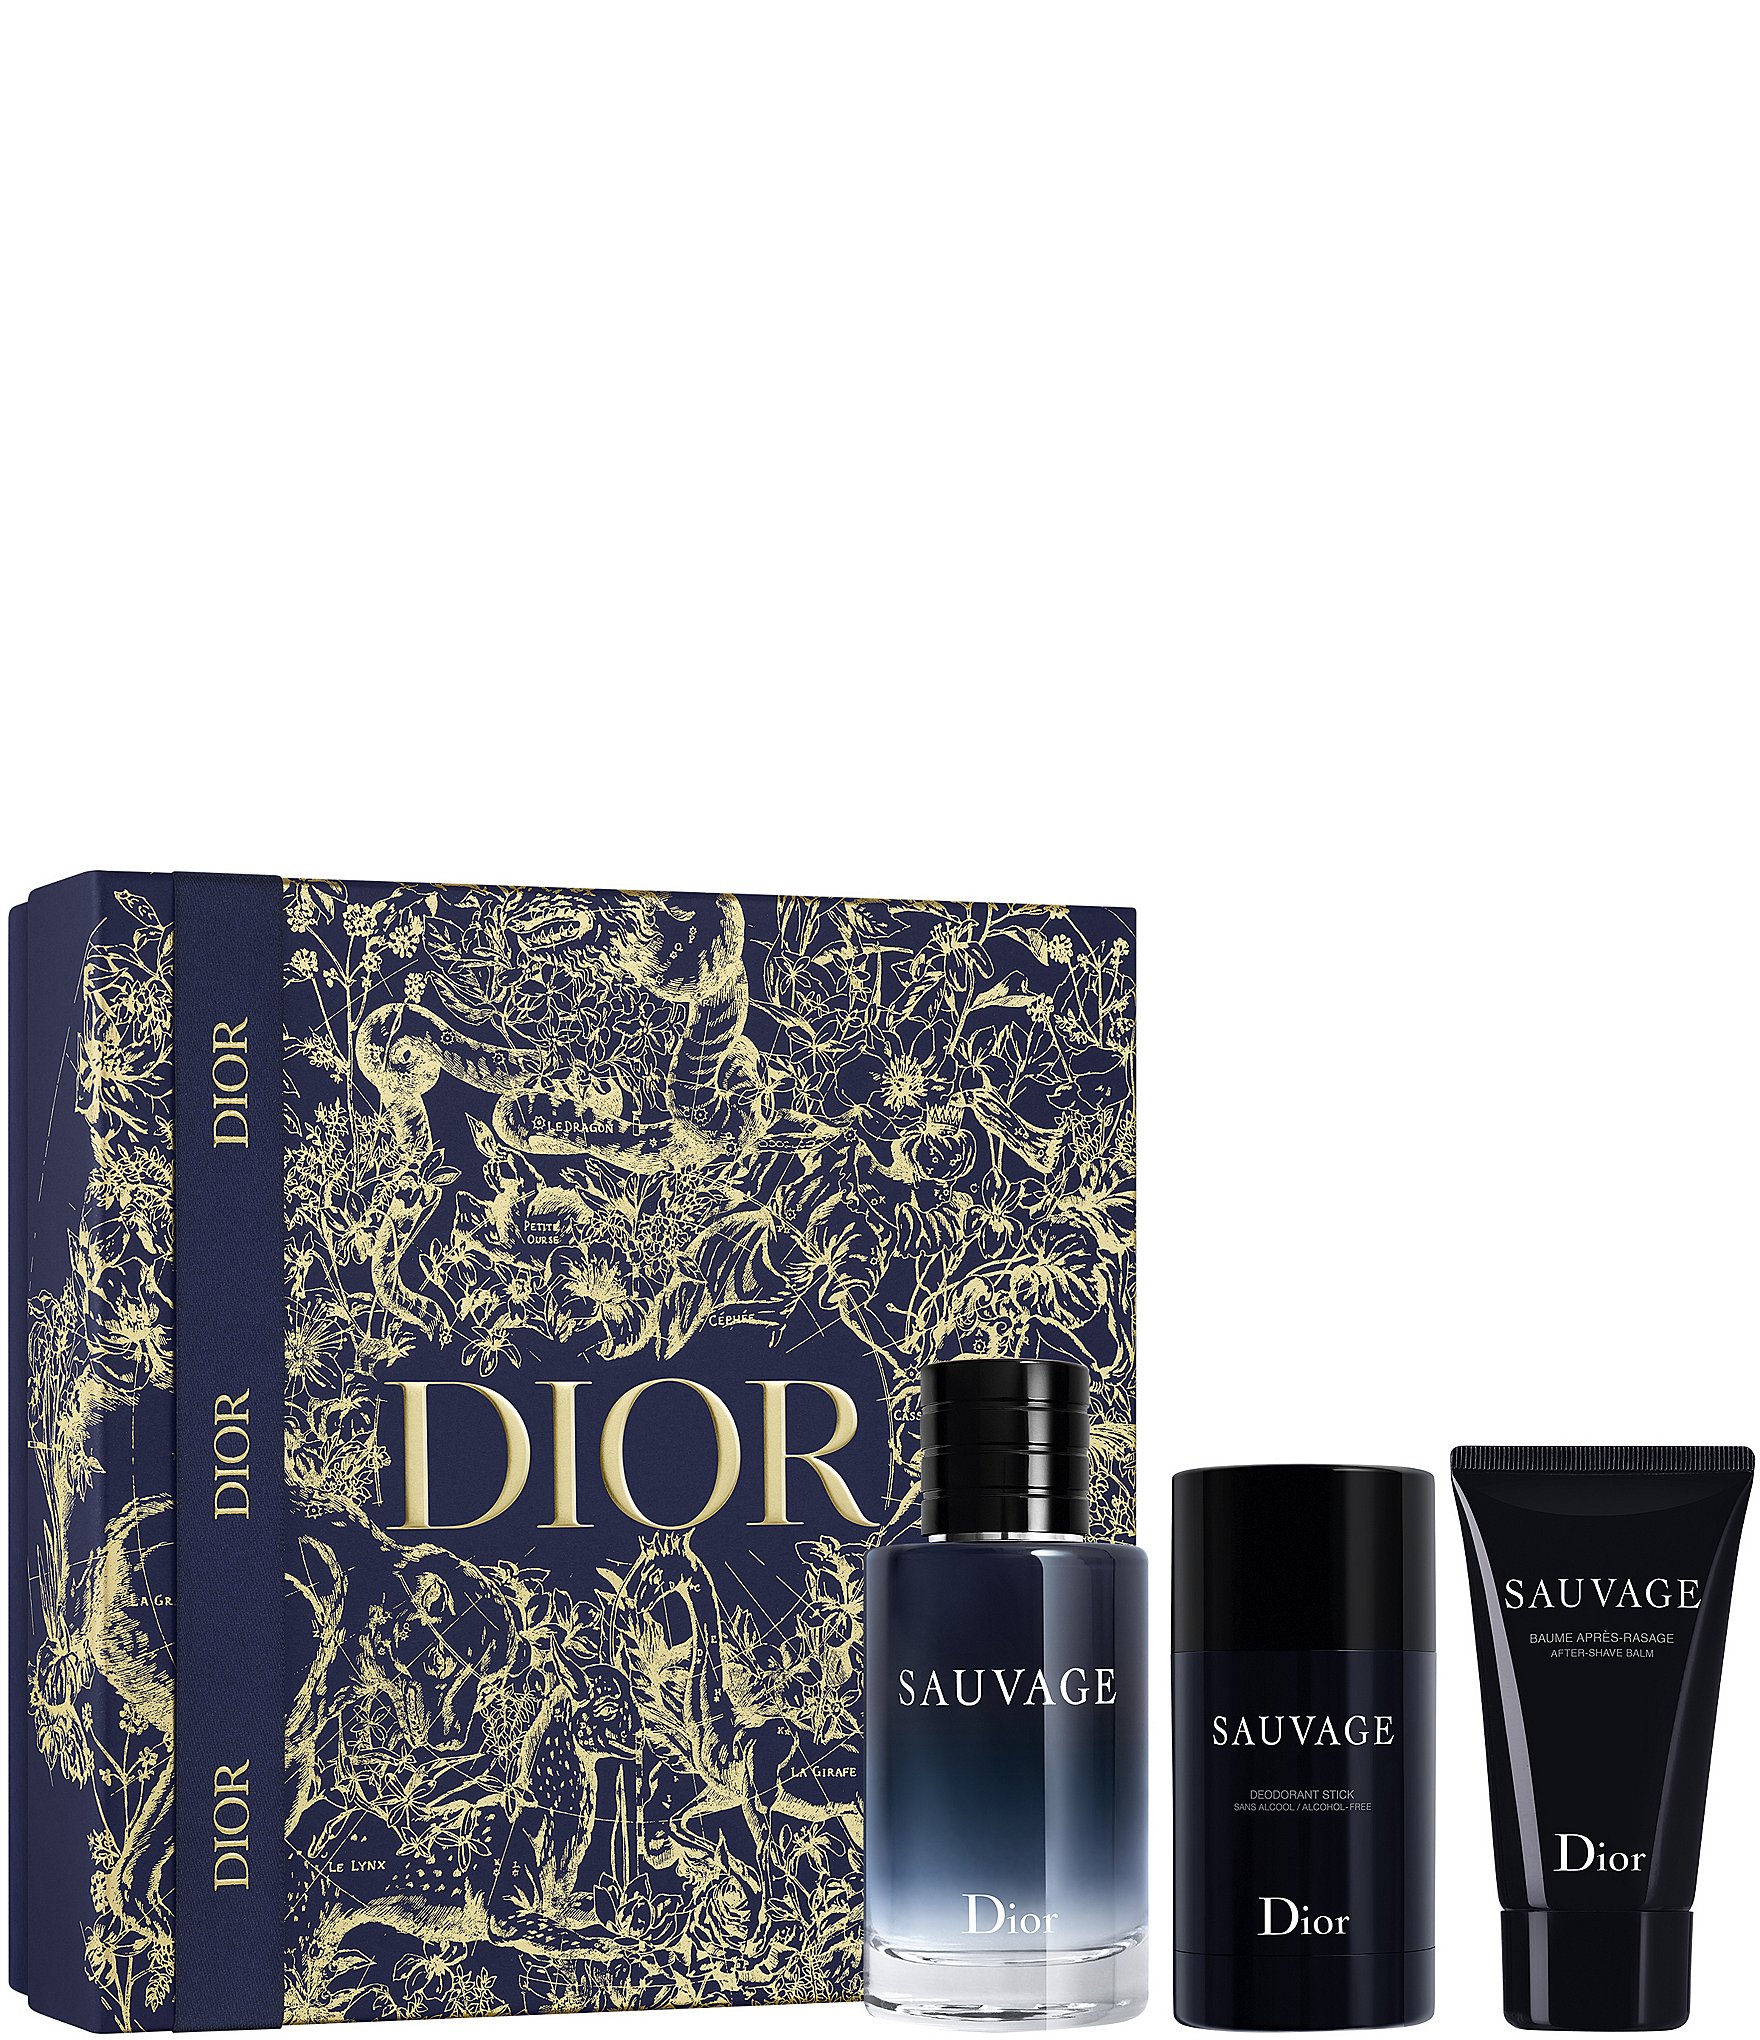 Perfume Dior Sauvage miniature set perfume 3 in 1 Perfume miniature gift set  Beauty  Personal Care Fragrance  Deodorants on Carousell